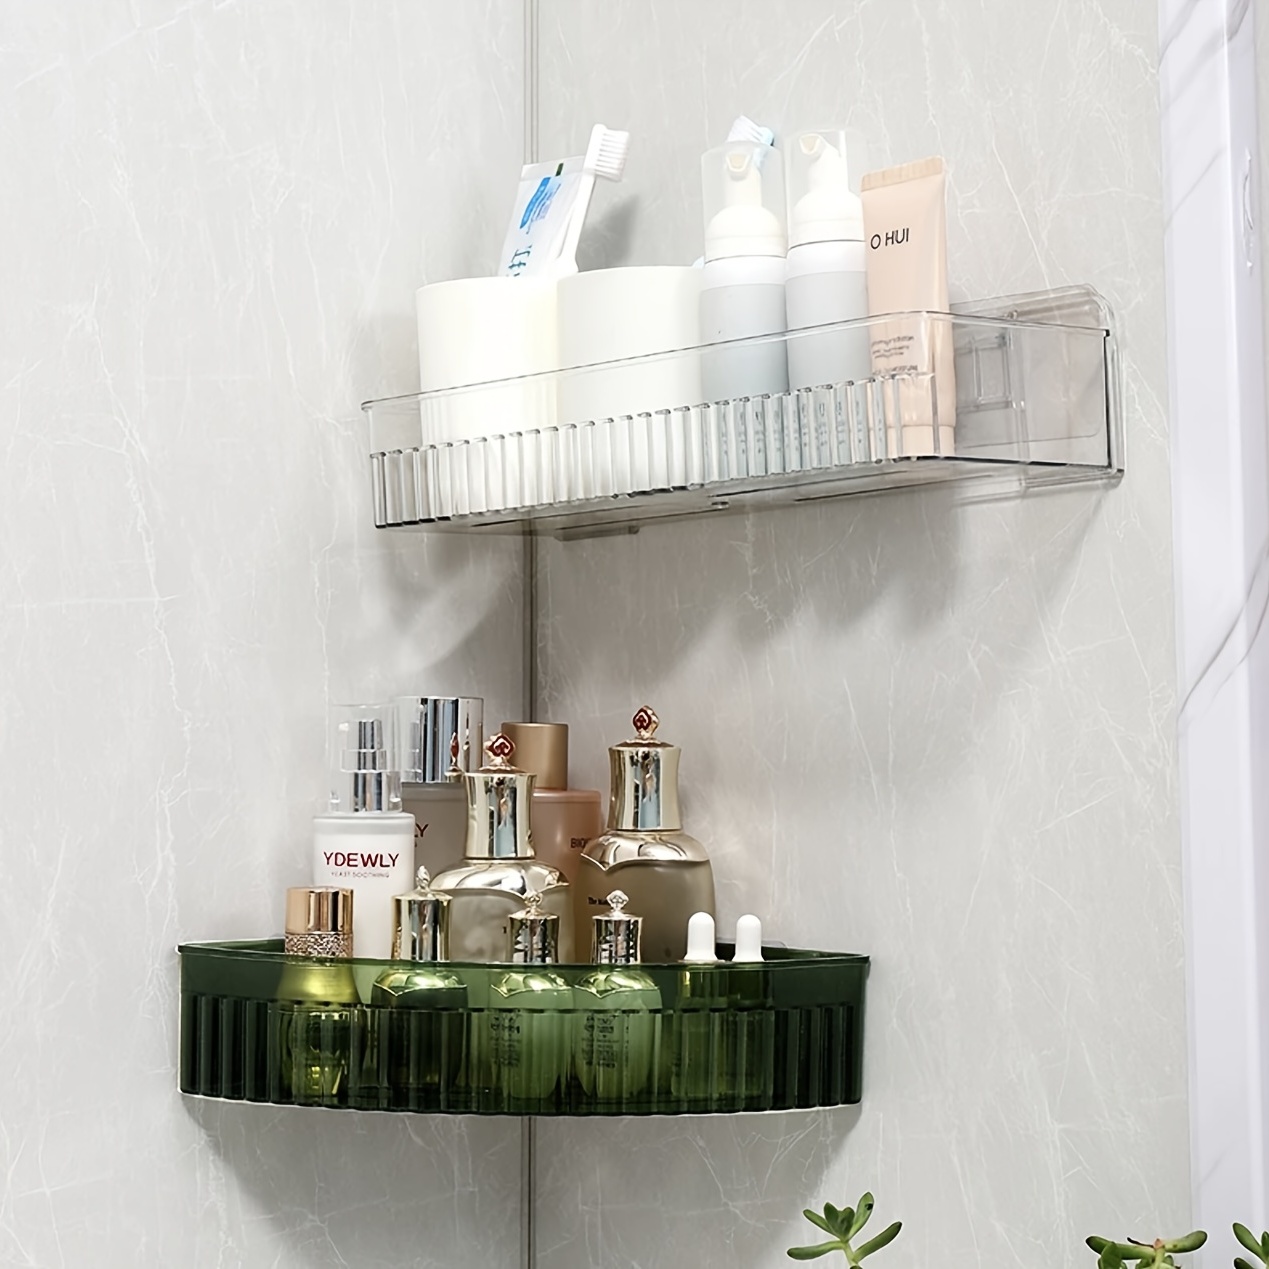 1pc Wall Mounted Bathroom Storage Rack, Shower Shelf For Inside Shower,  Shampoo Shower Gel Holder For Shower Wall, Bathroom Caddy Organizer, Shower  Ca